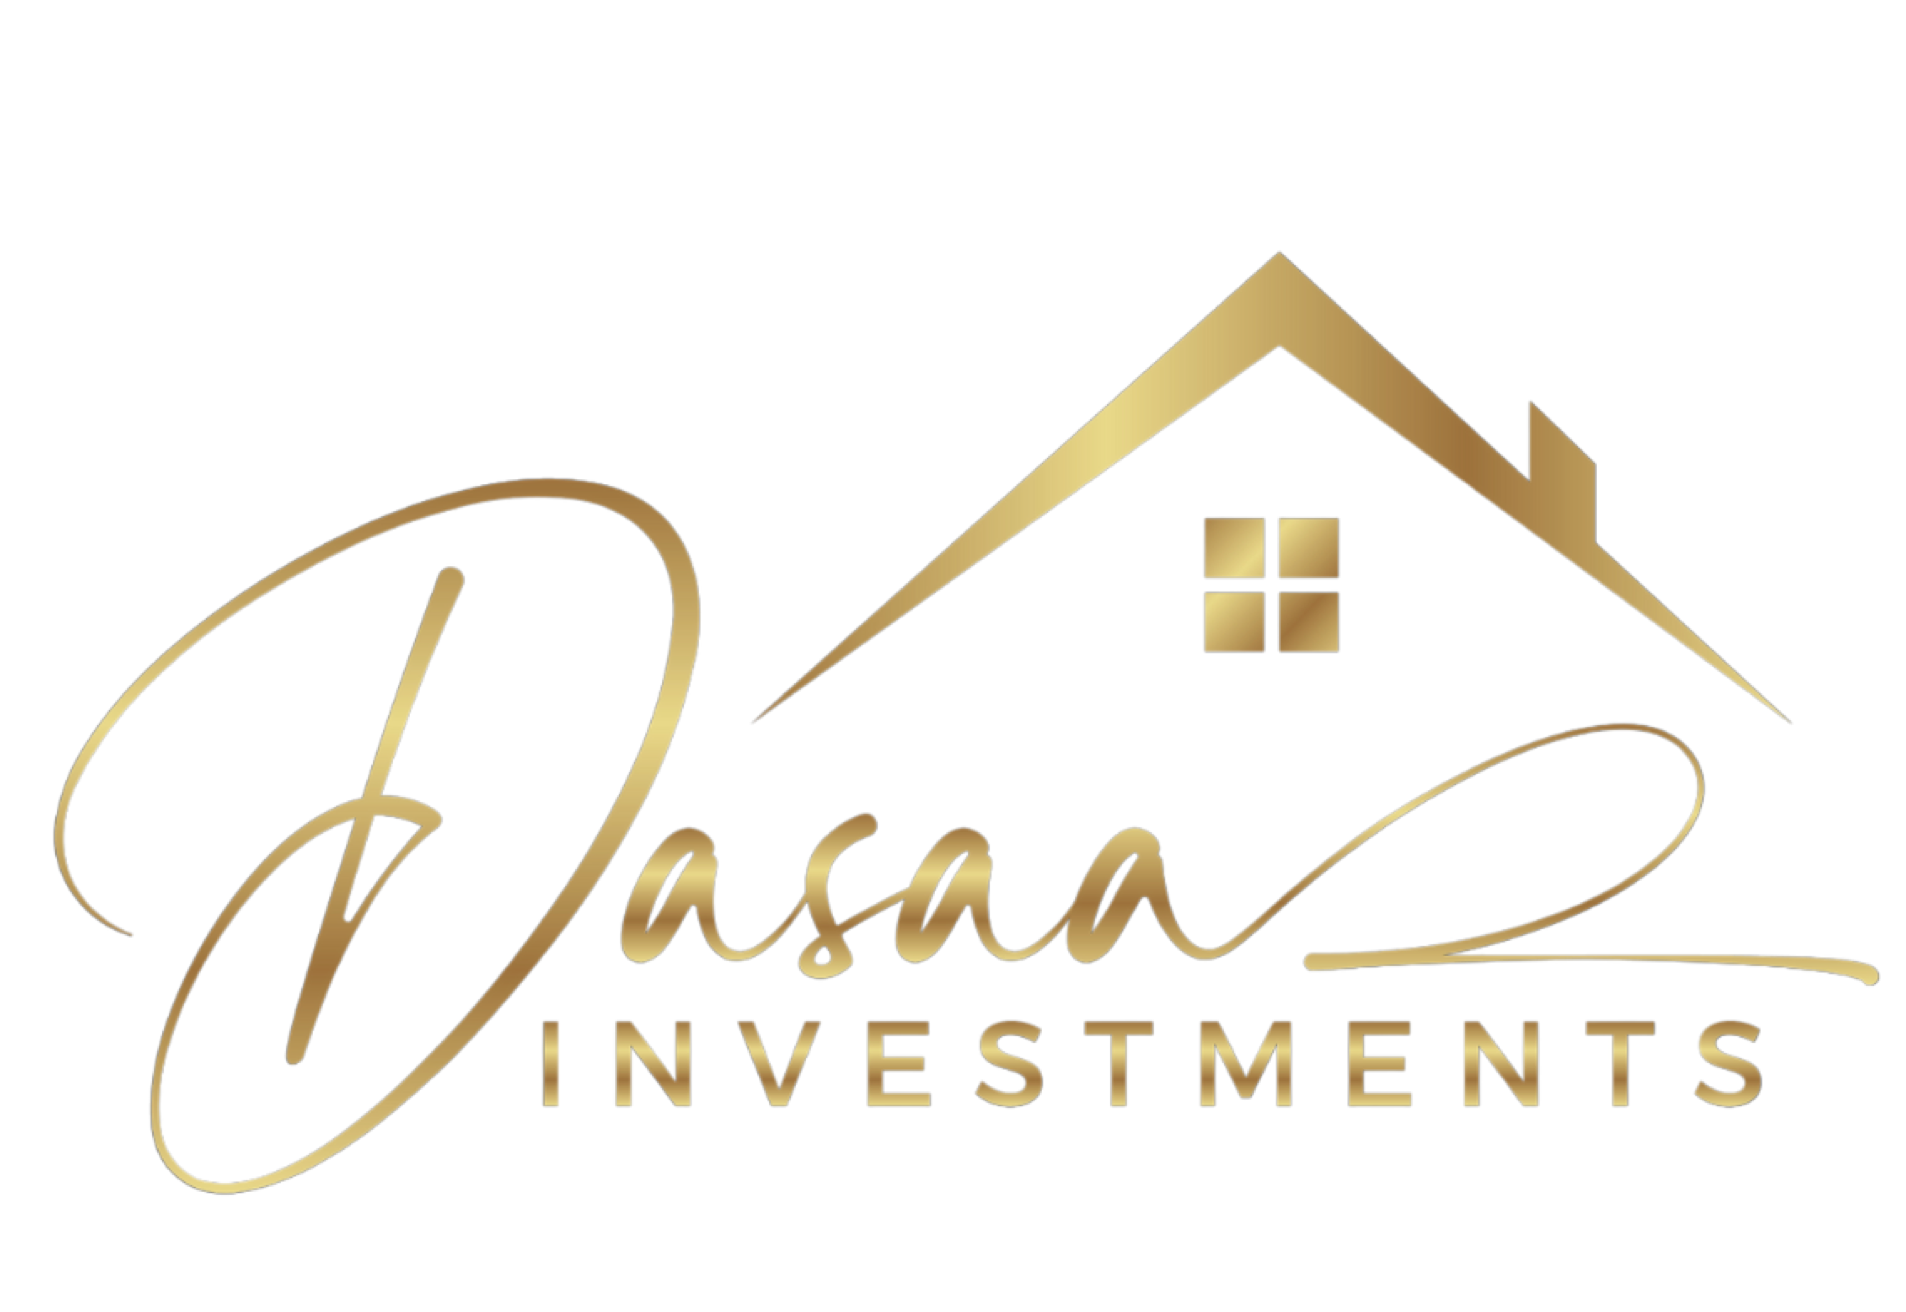 Dasaa Investment logo